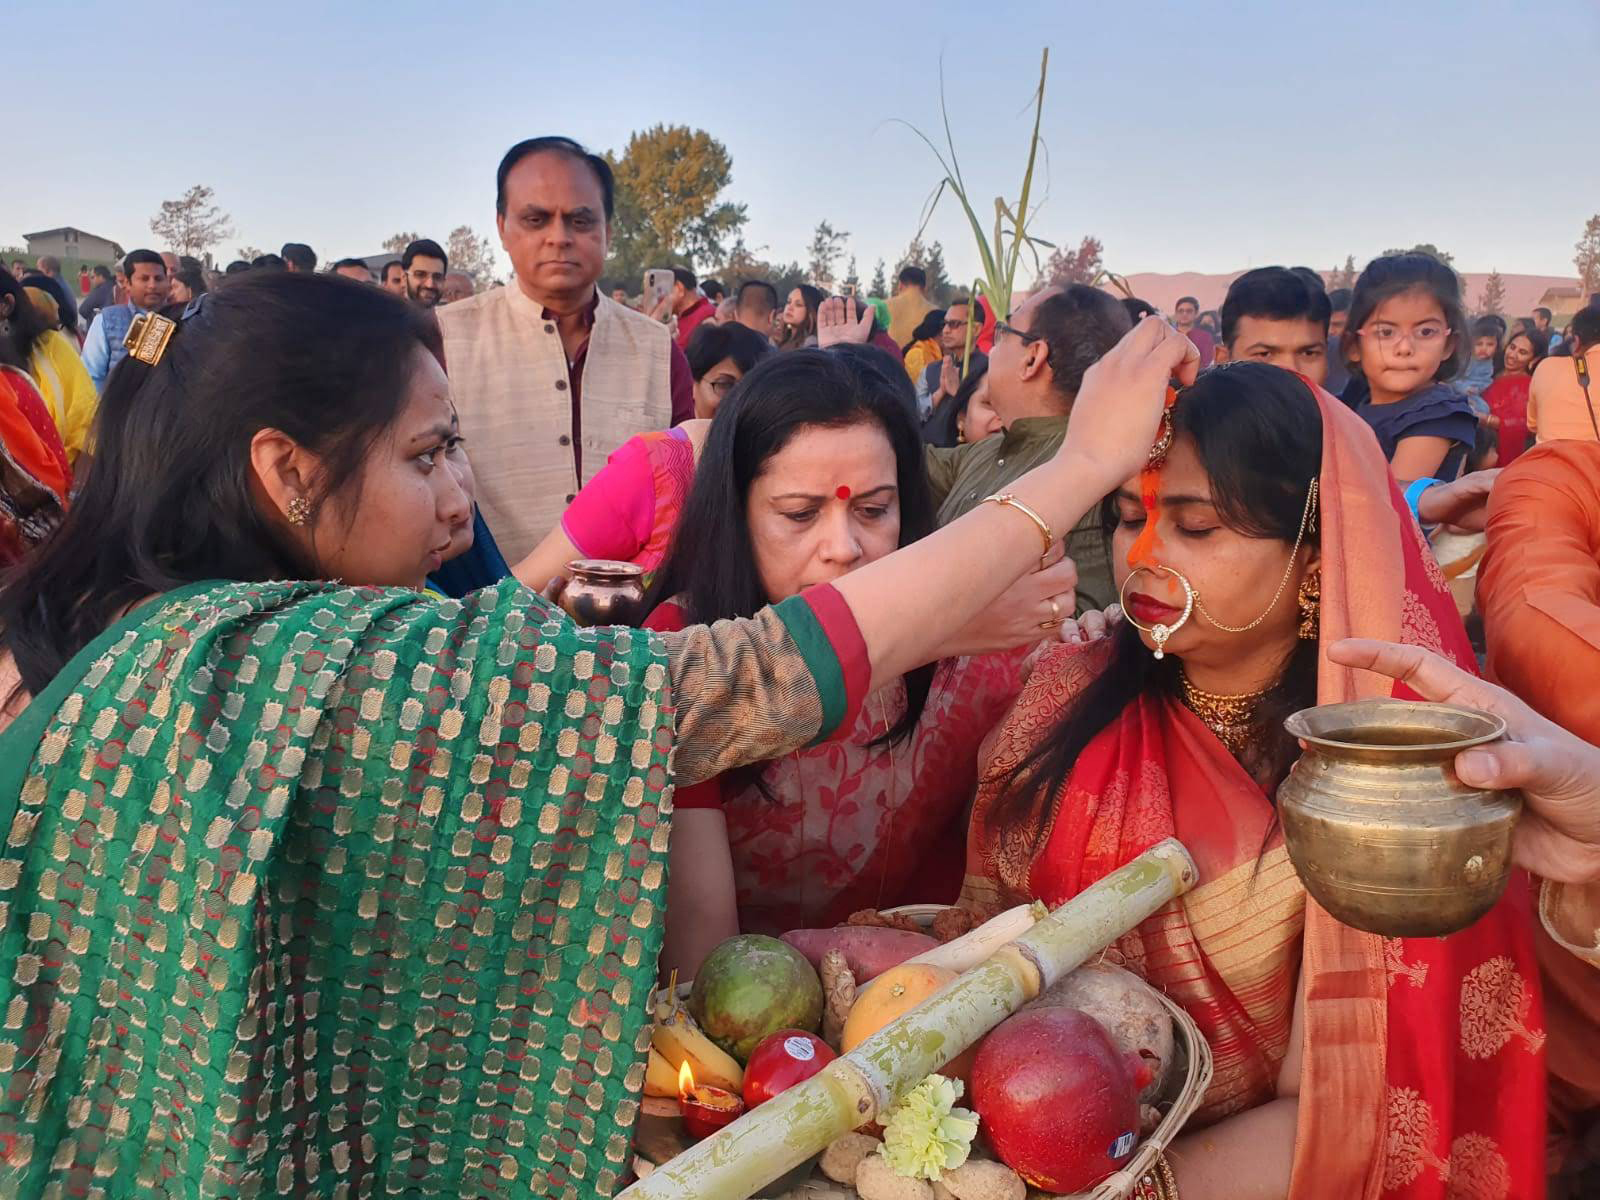 Manisha Pathak, right, prepares to provide Chhath puja prayers at Quarry Lakes Regional Recreation Area in Fremont, California, in Nov. 2019. (Photo courtesy Sunil and Shalini Singh)